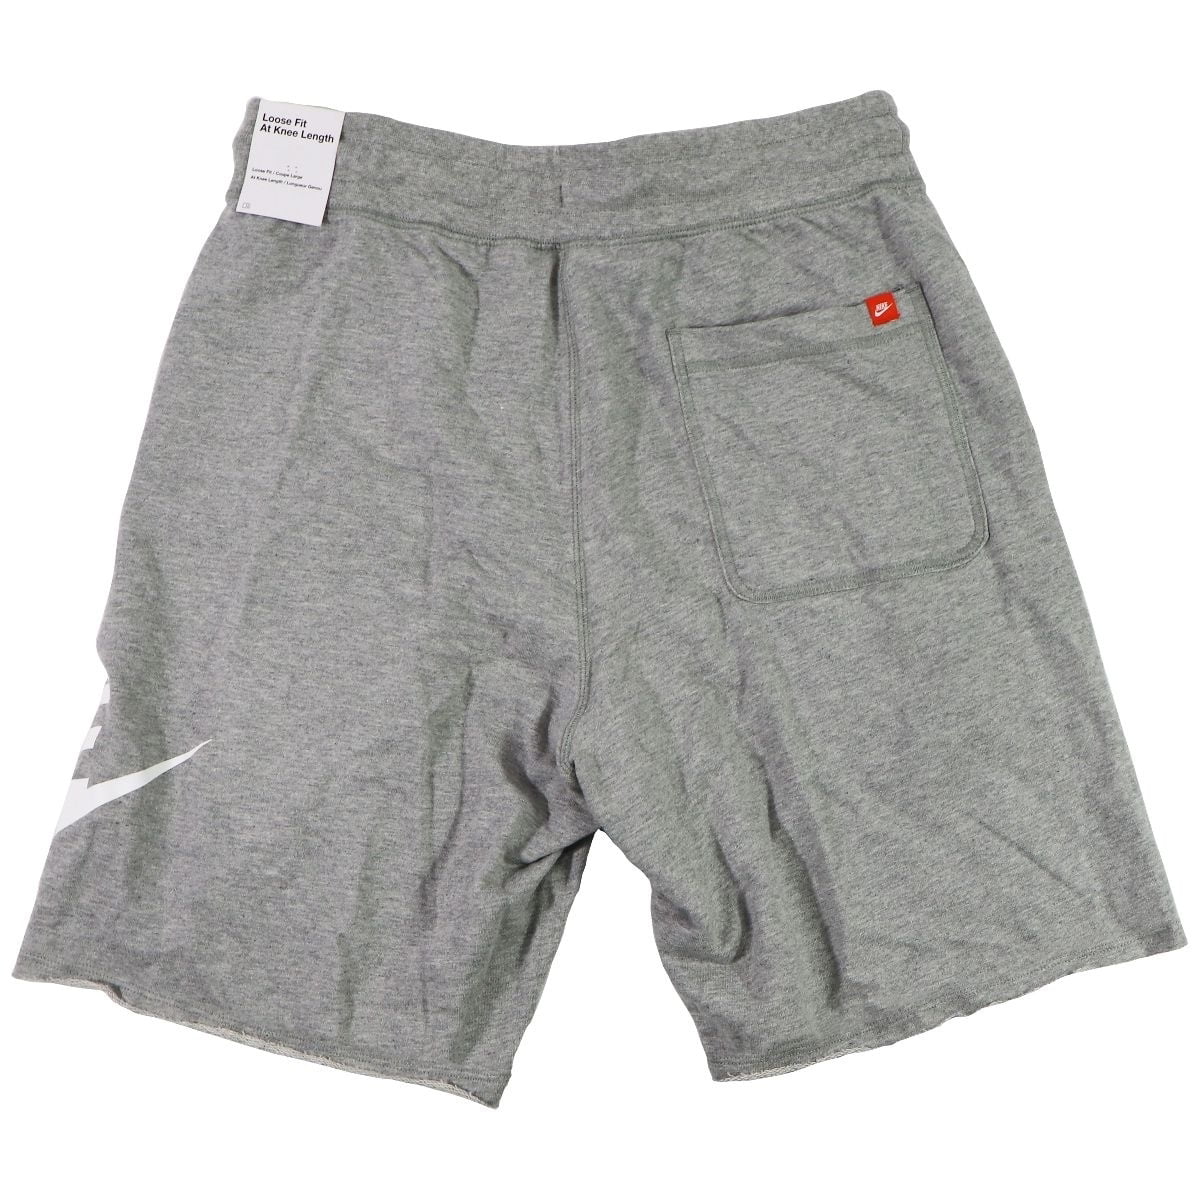 Nike Mens Aw77 French Terry Shorts - Grey/White (Size: Medium) - Walmart.com